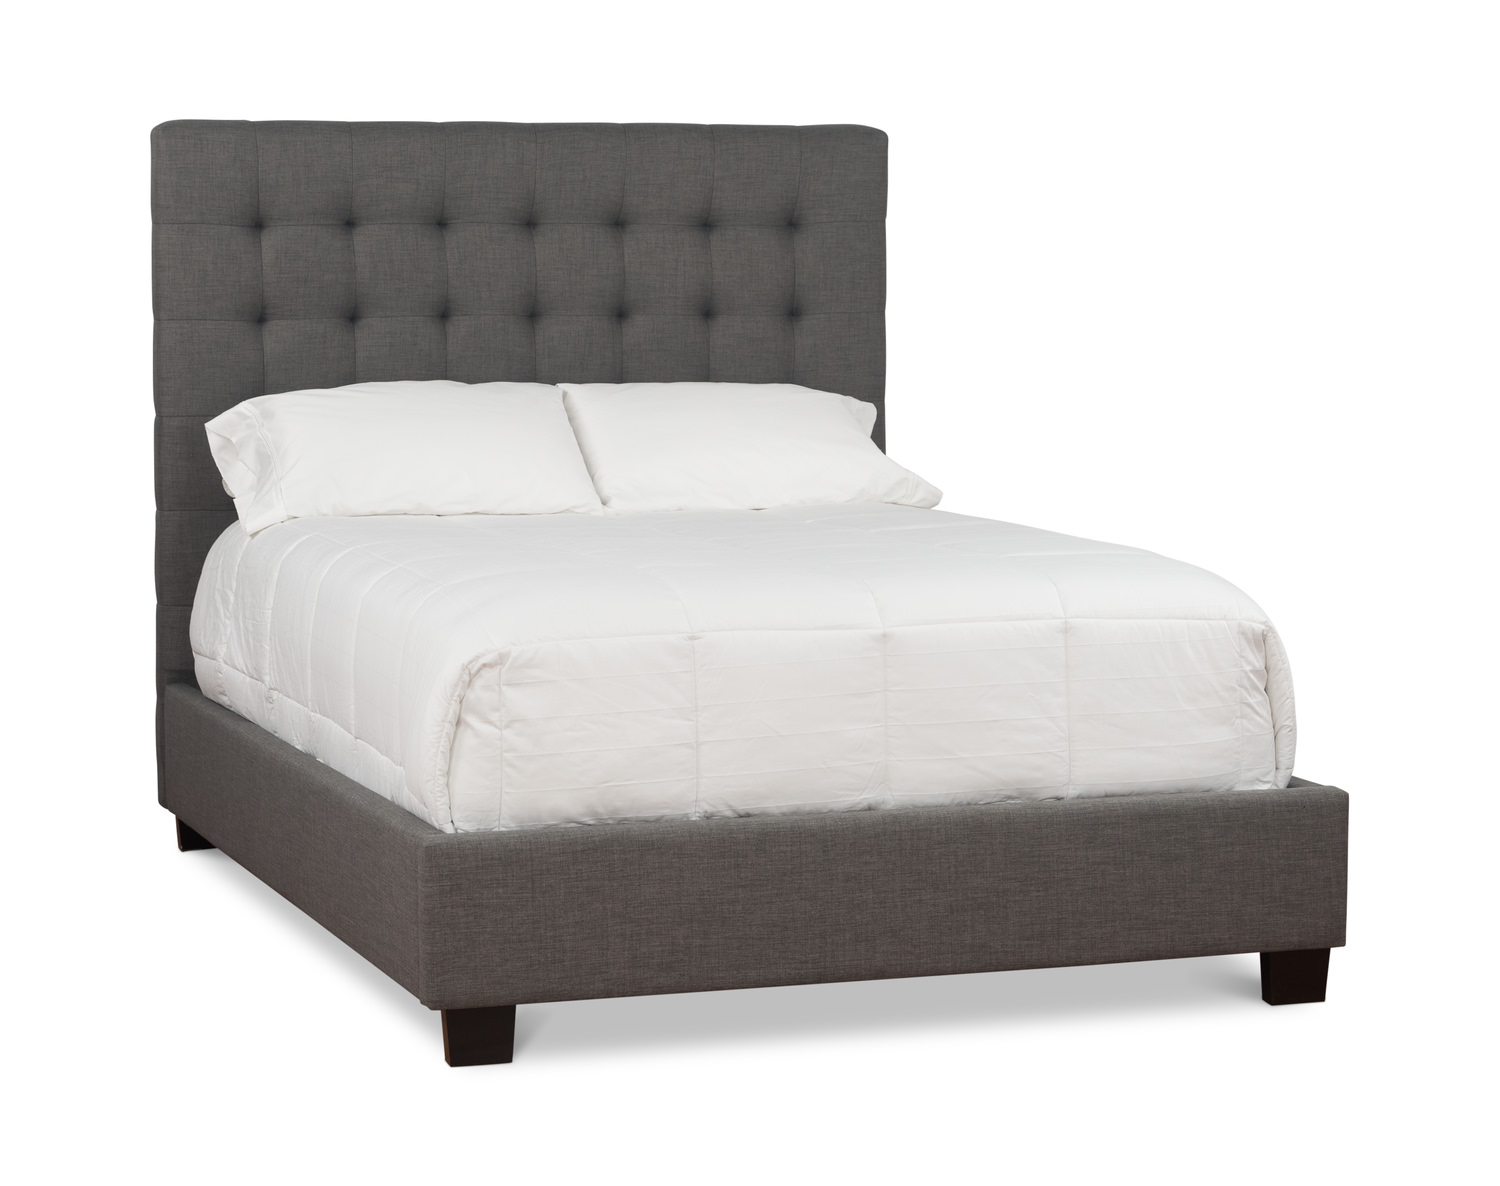 Harlow Ii Storage Bed By Thomas Cole Designs Hom Furniture